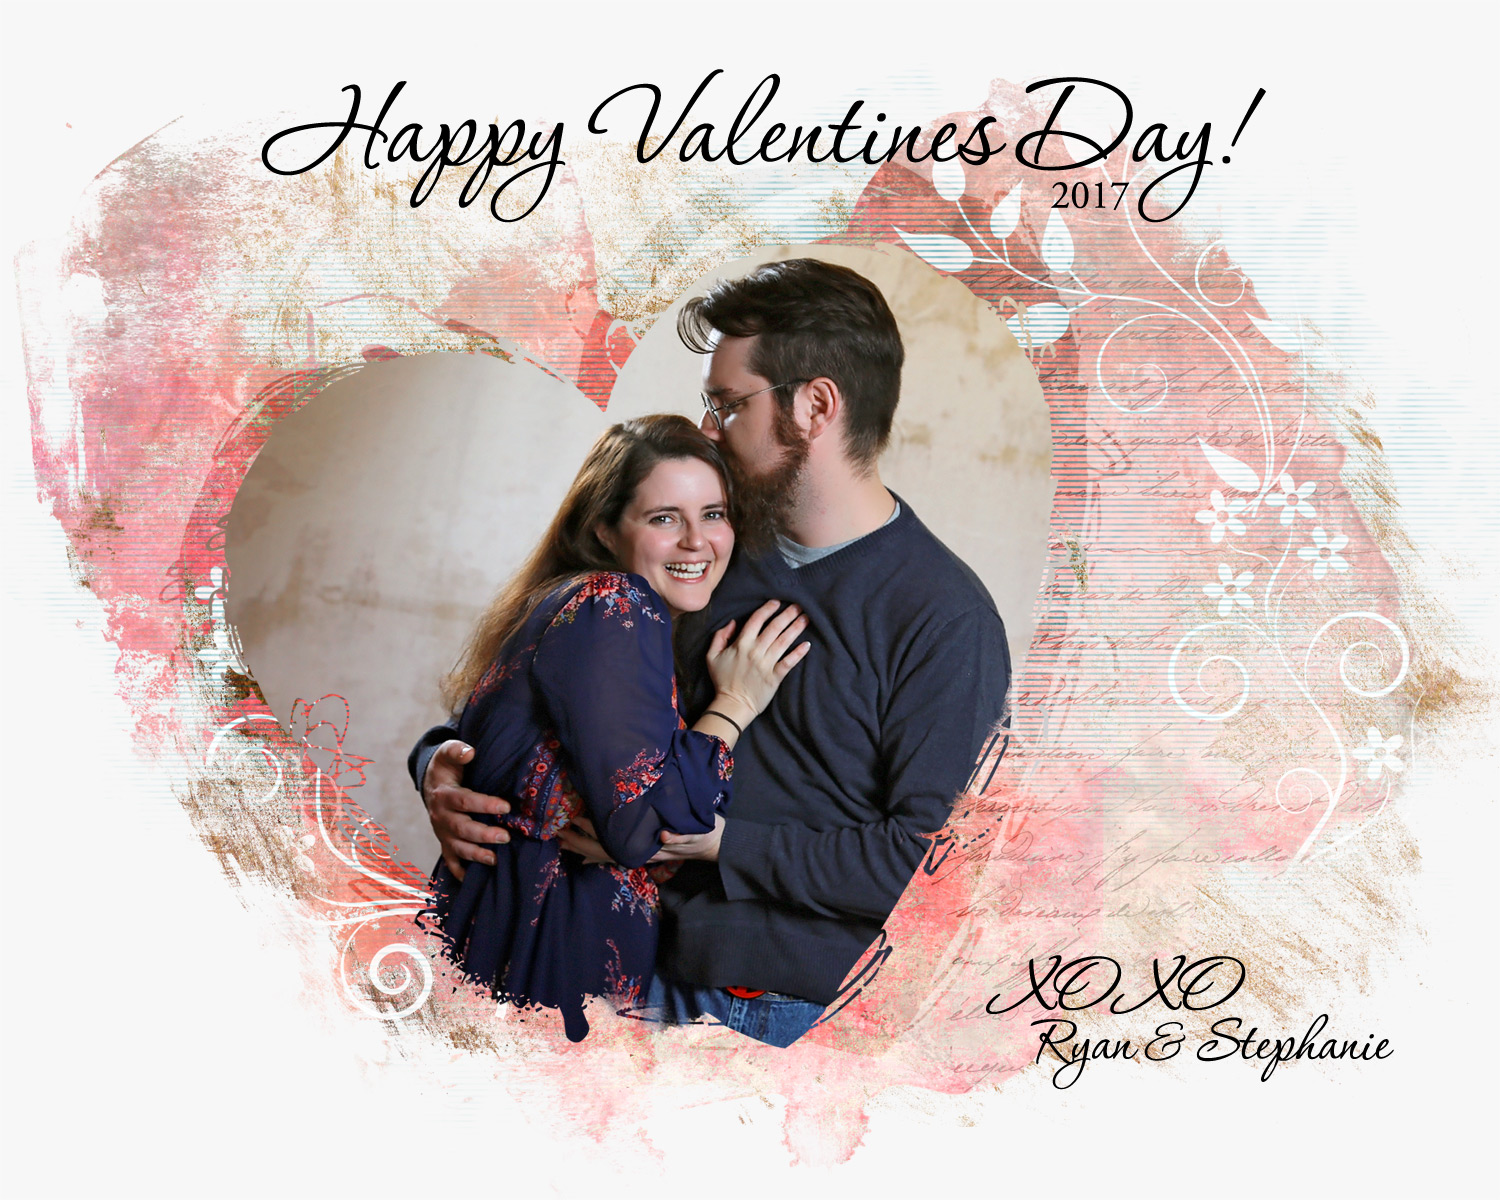 Ryan & Stephanie Valentines Day 2017